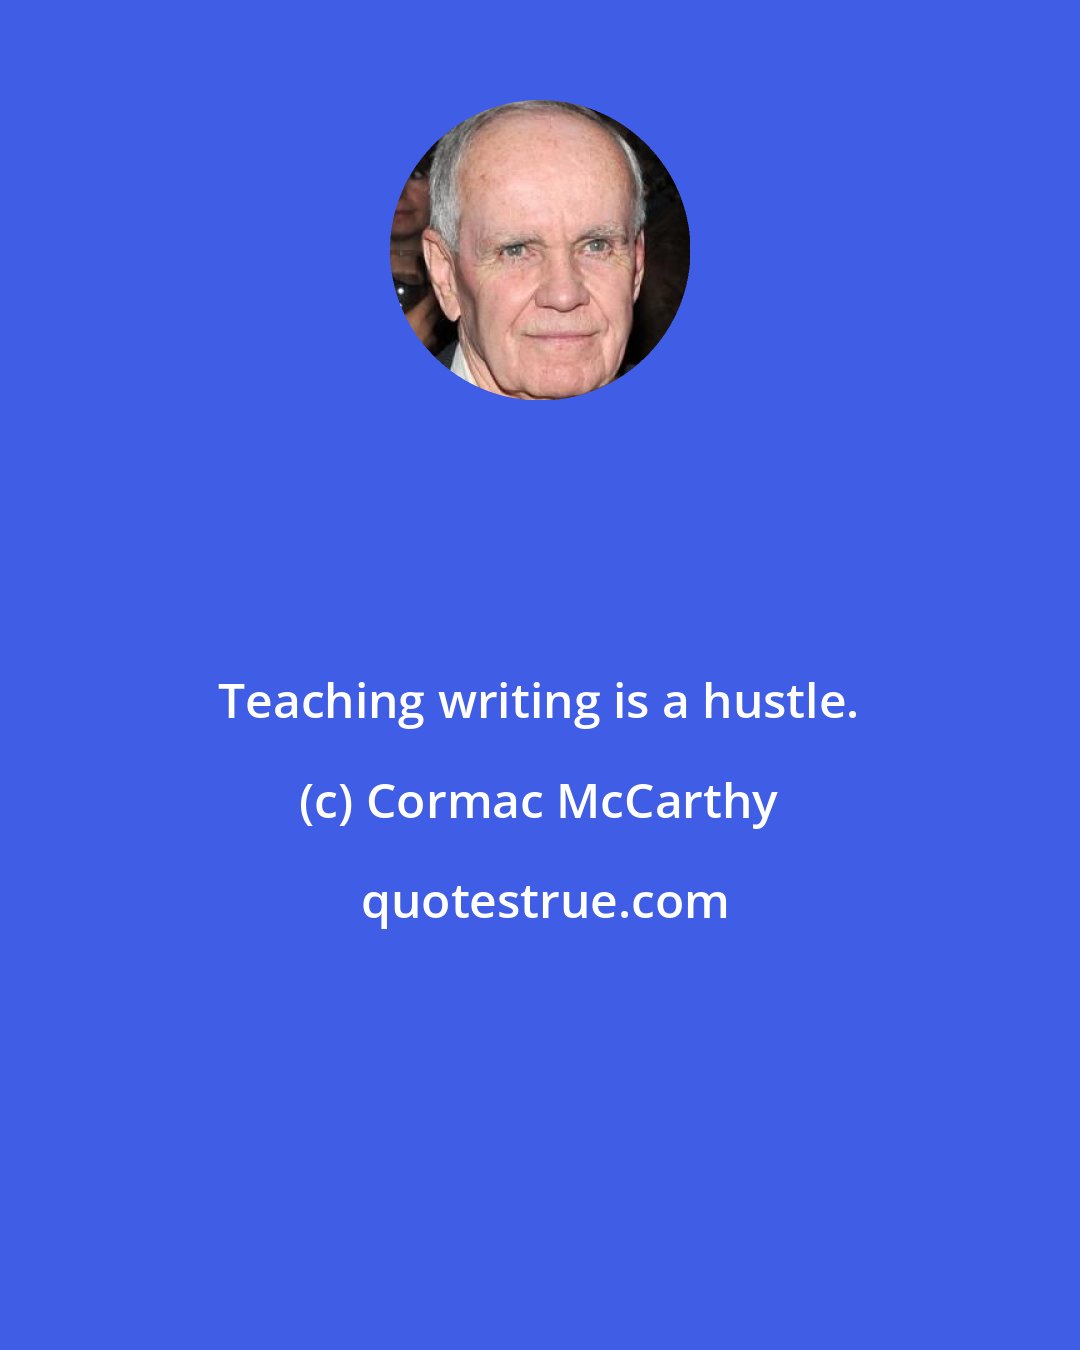 Cormac McCarthy: Teaching writing is a hustle.